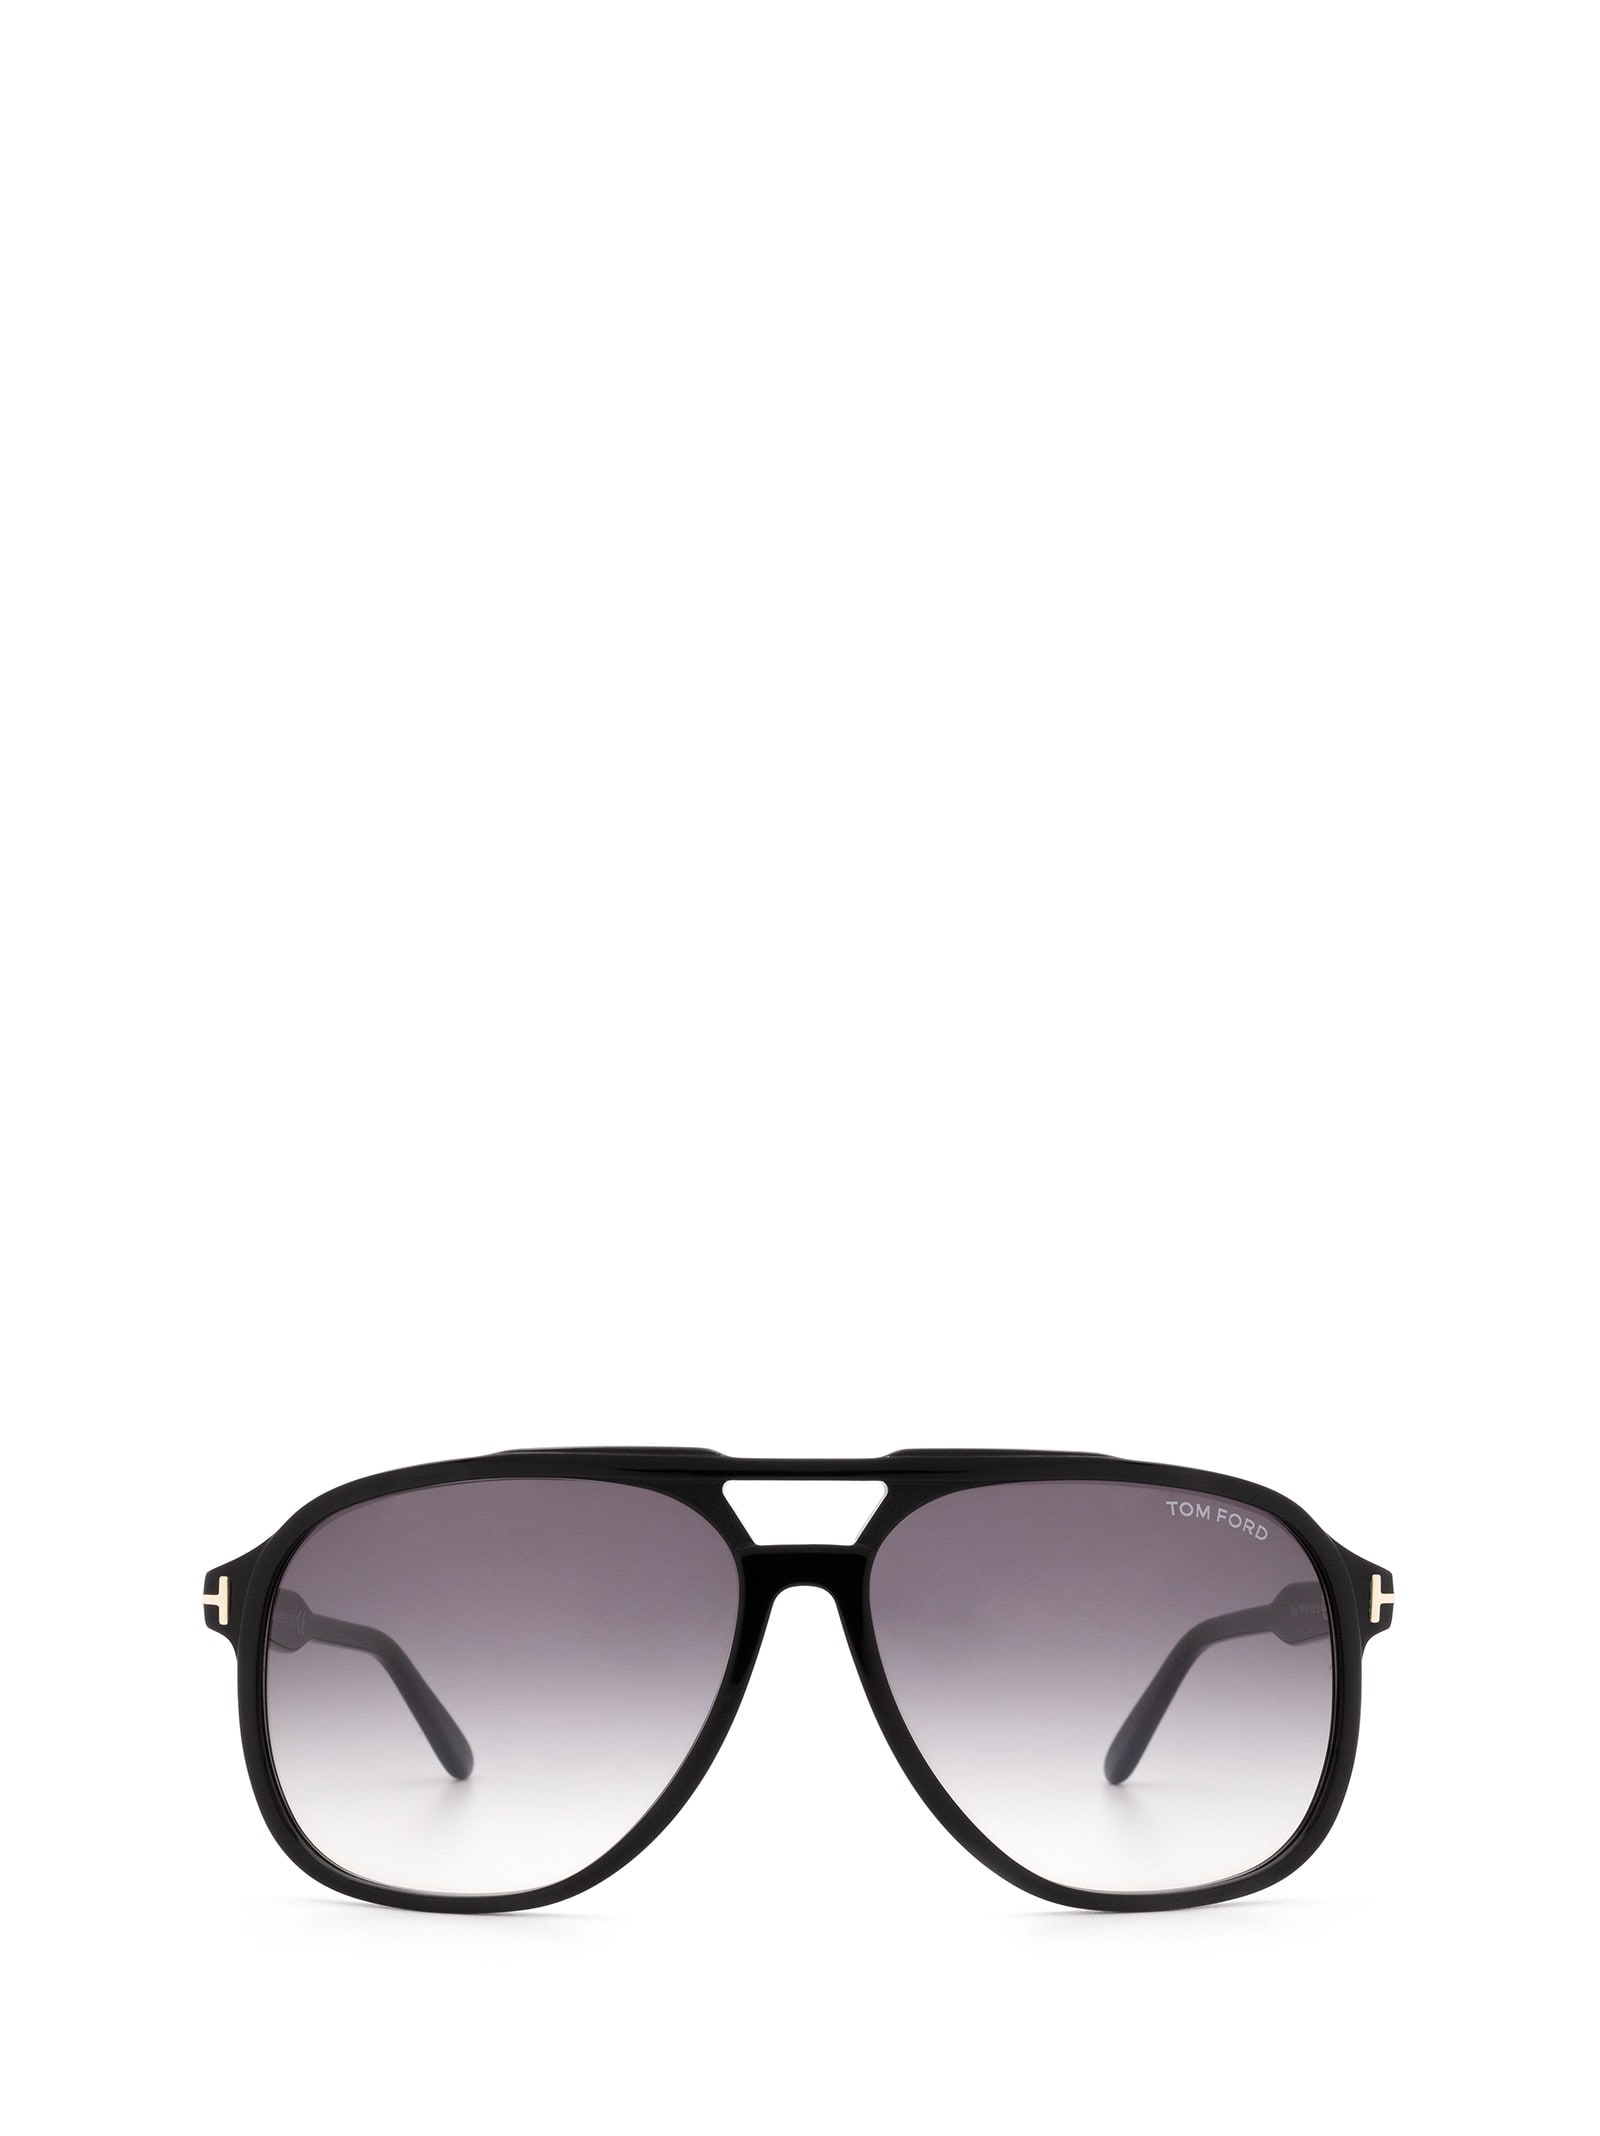 Tom Ford Eyewear Tom Ford Ft0753 Shiny Black Sunglasses